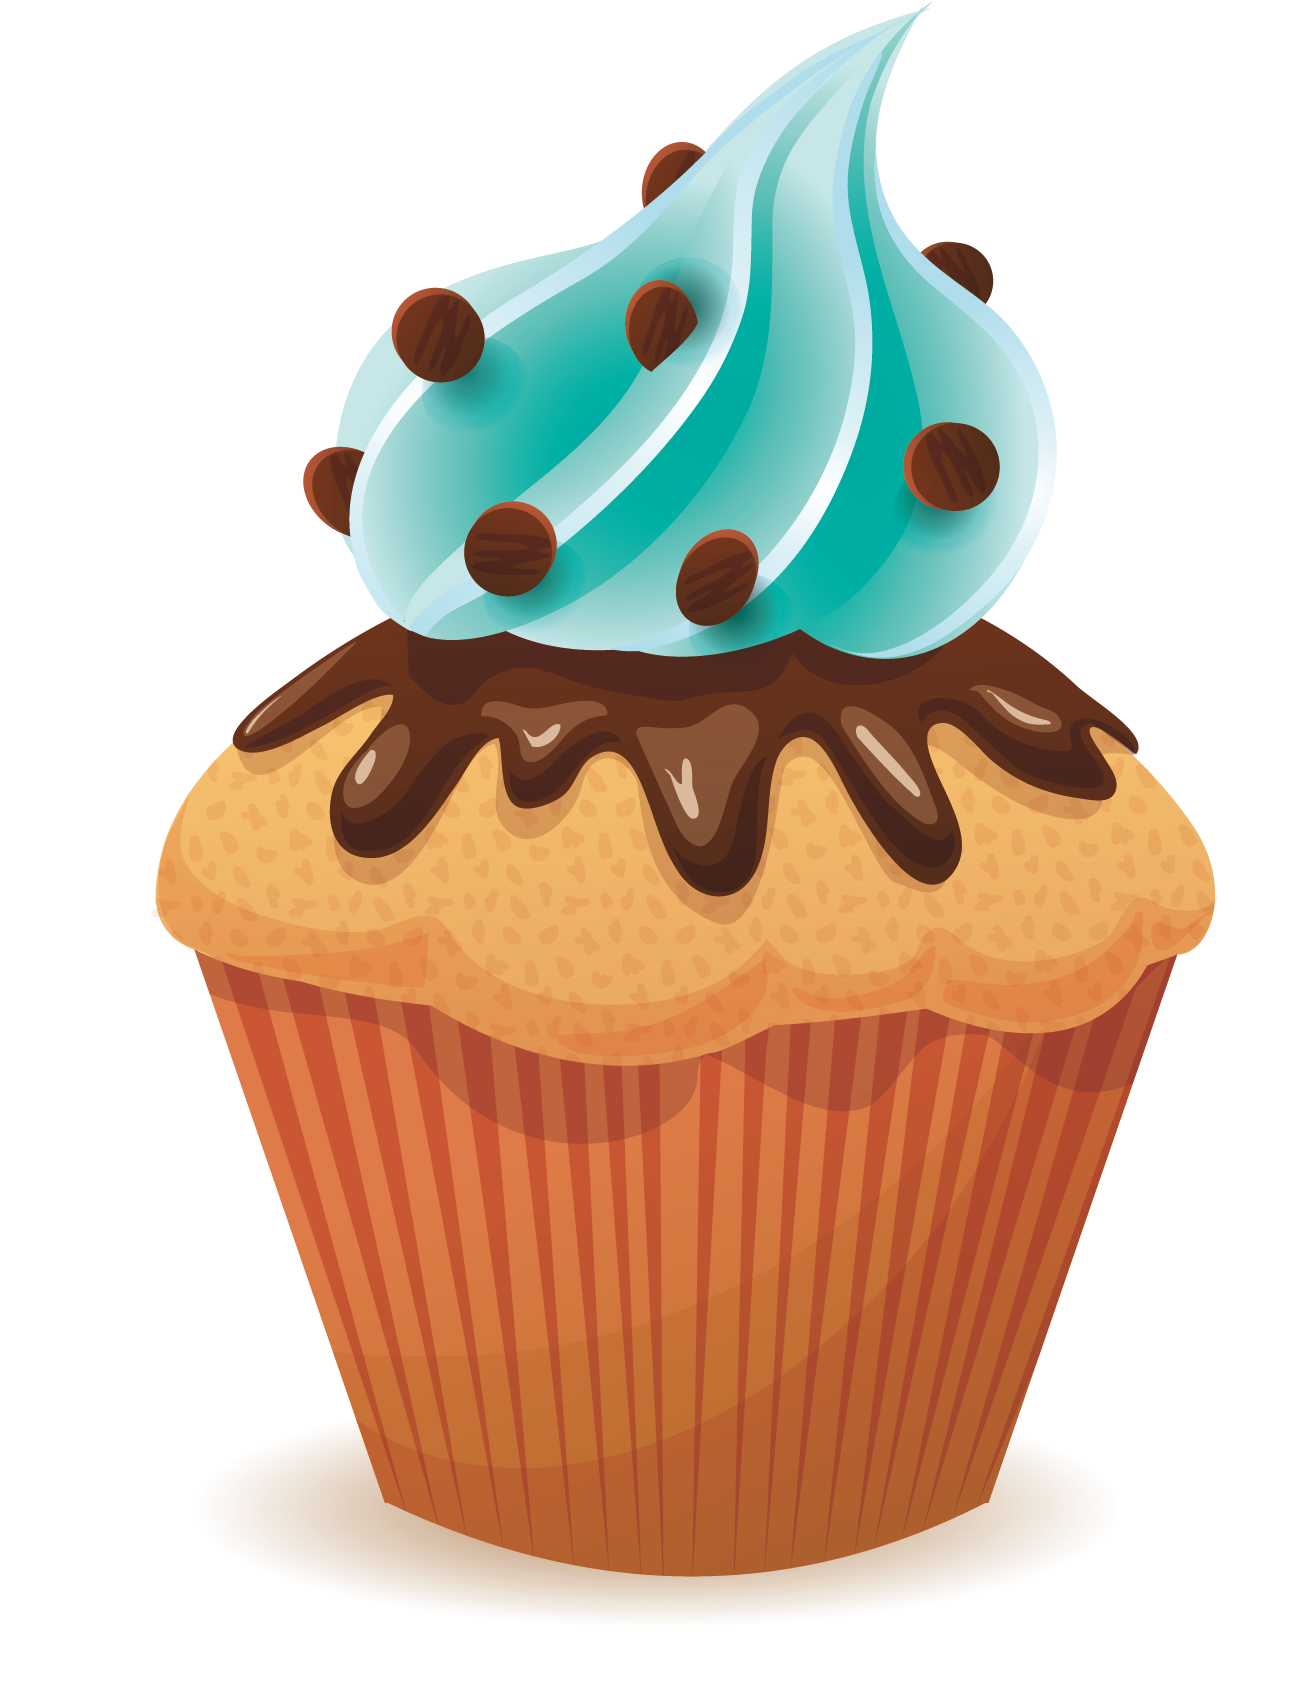 Muffin Cupcake Bakery Clip Art - Cupcake Gratis (2362x2362)